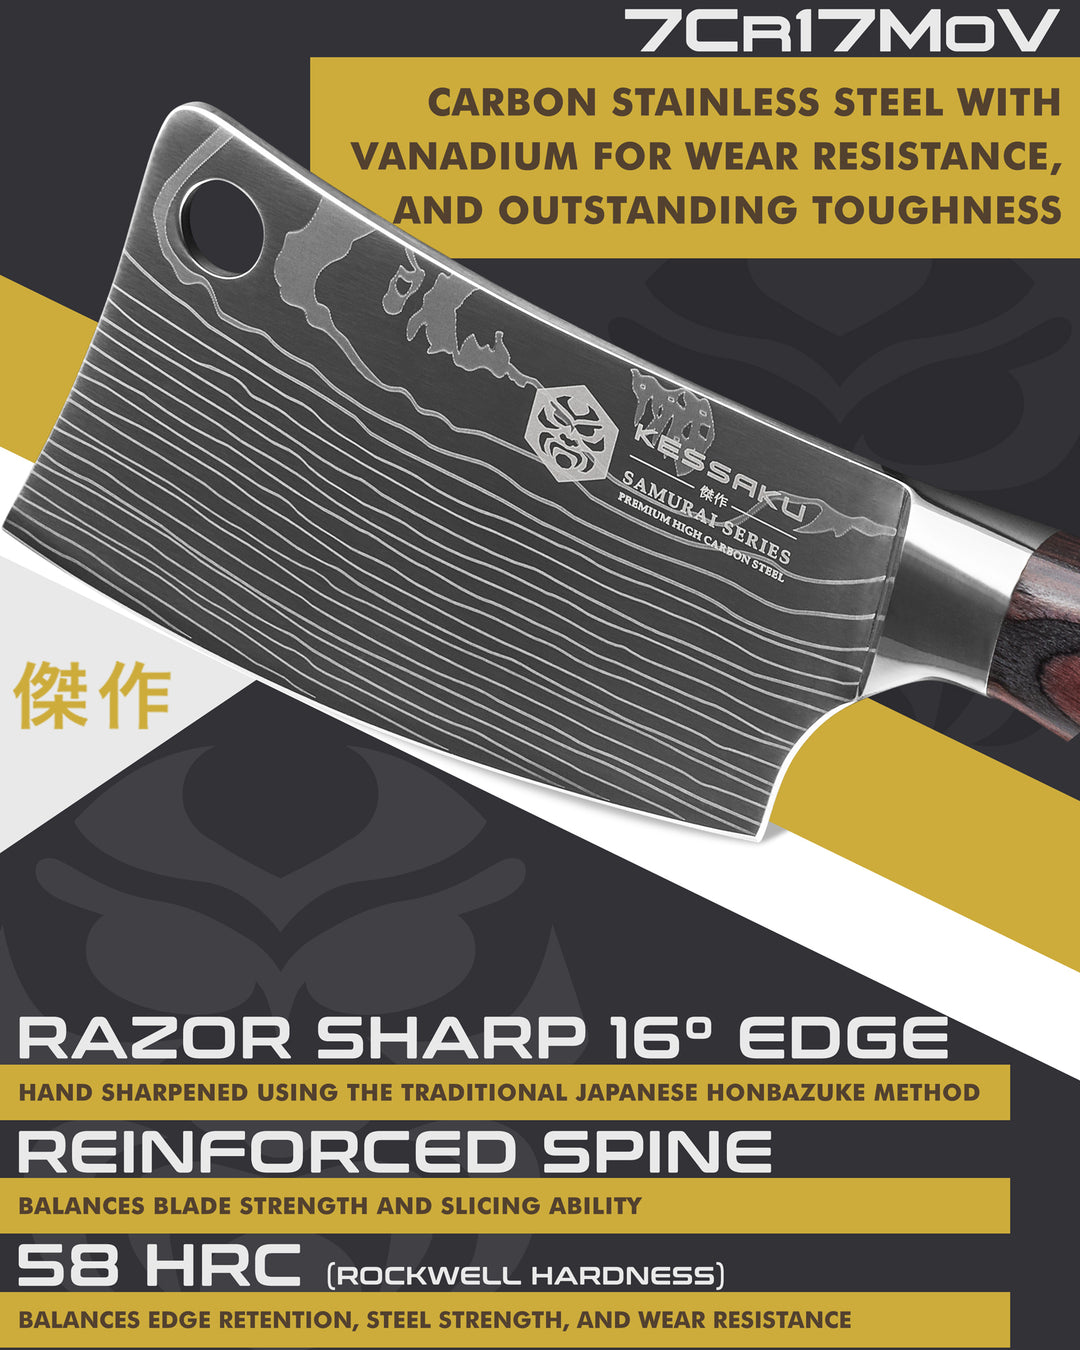 Kessaku Samurai Mini Cleaver blade features: 7Cr17MoV steel, 58 HRC, 16 degree edge, reinforced spine